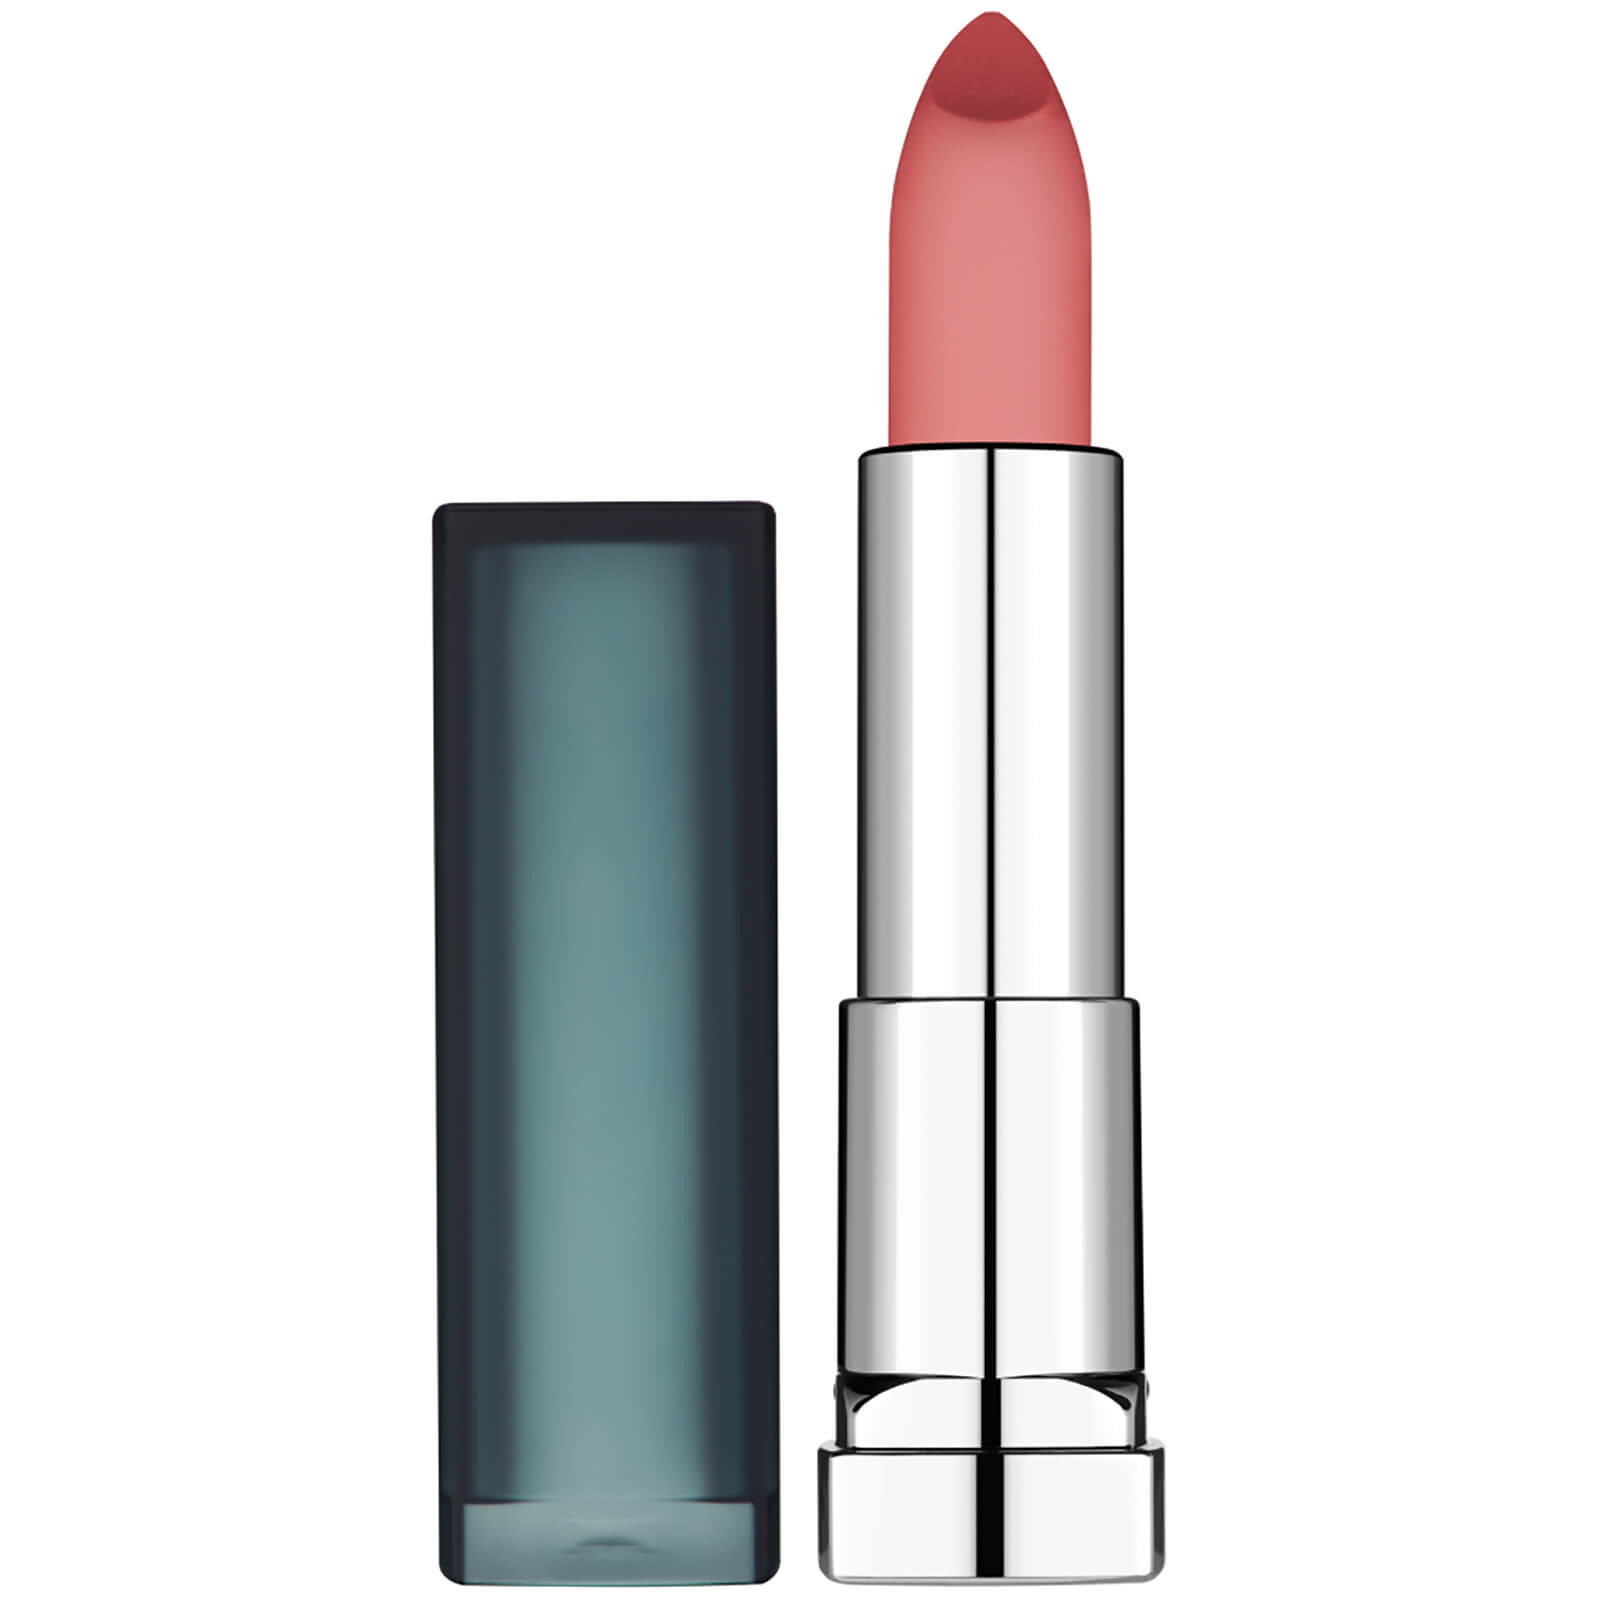 Maybelline Colour Sensational Lipstick Matte Nude (Various Shades) - 2 Smoky Rose